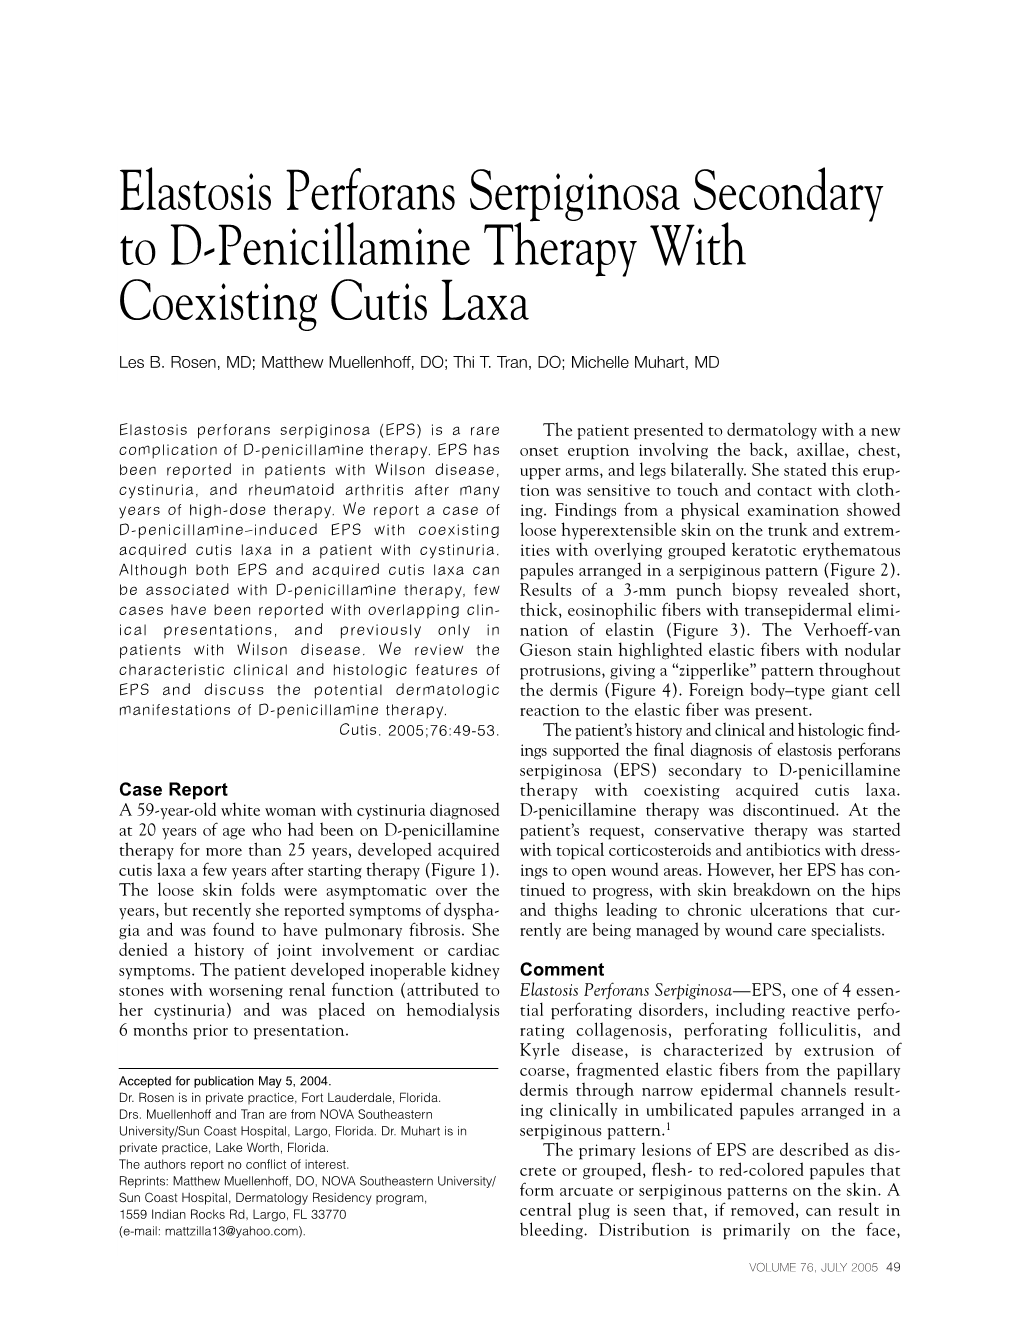 Elastosis Perforans Serpiginosa Secondary to D-Penicillamine Therapy with Coexisting Cutis Laxa